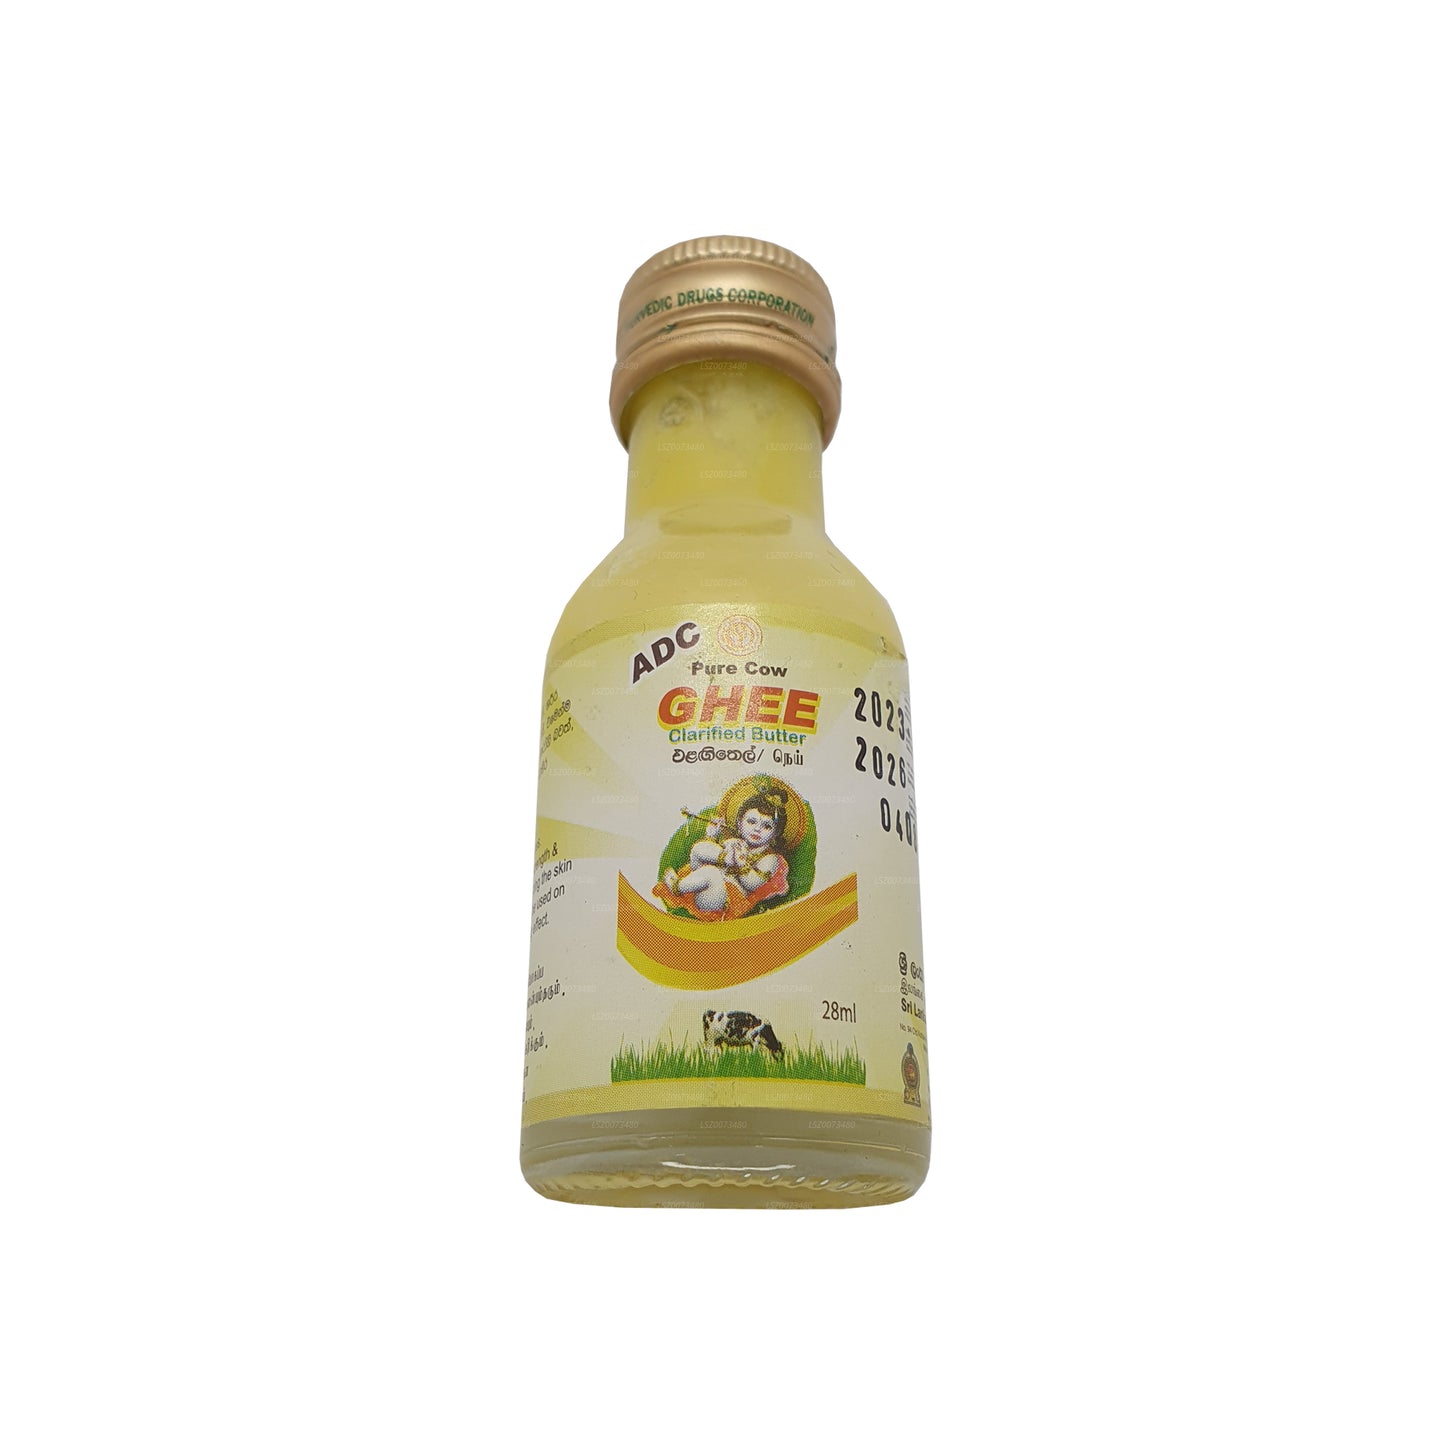 SLADC Ghee Oil (28ml)